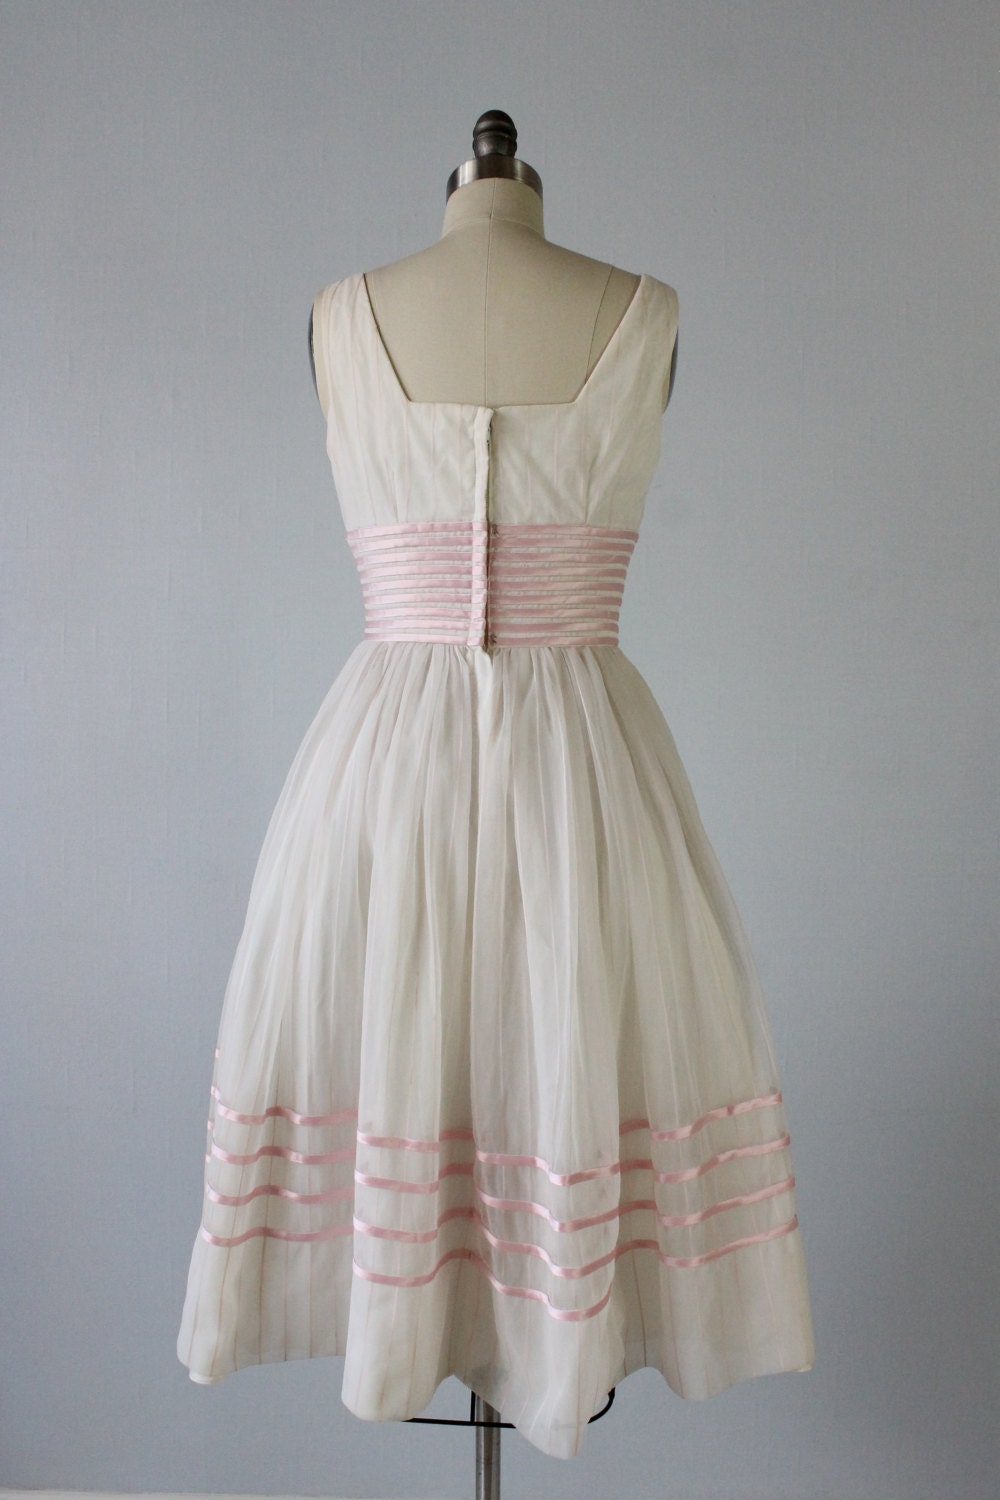 Vintage 1950s Dress / 50s Formal Dress / Party Dress / Pink